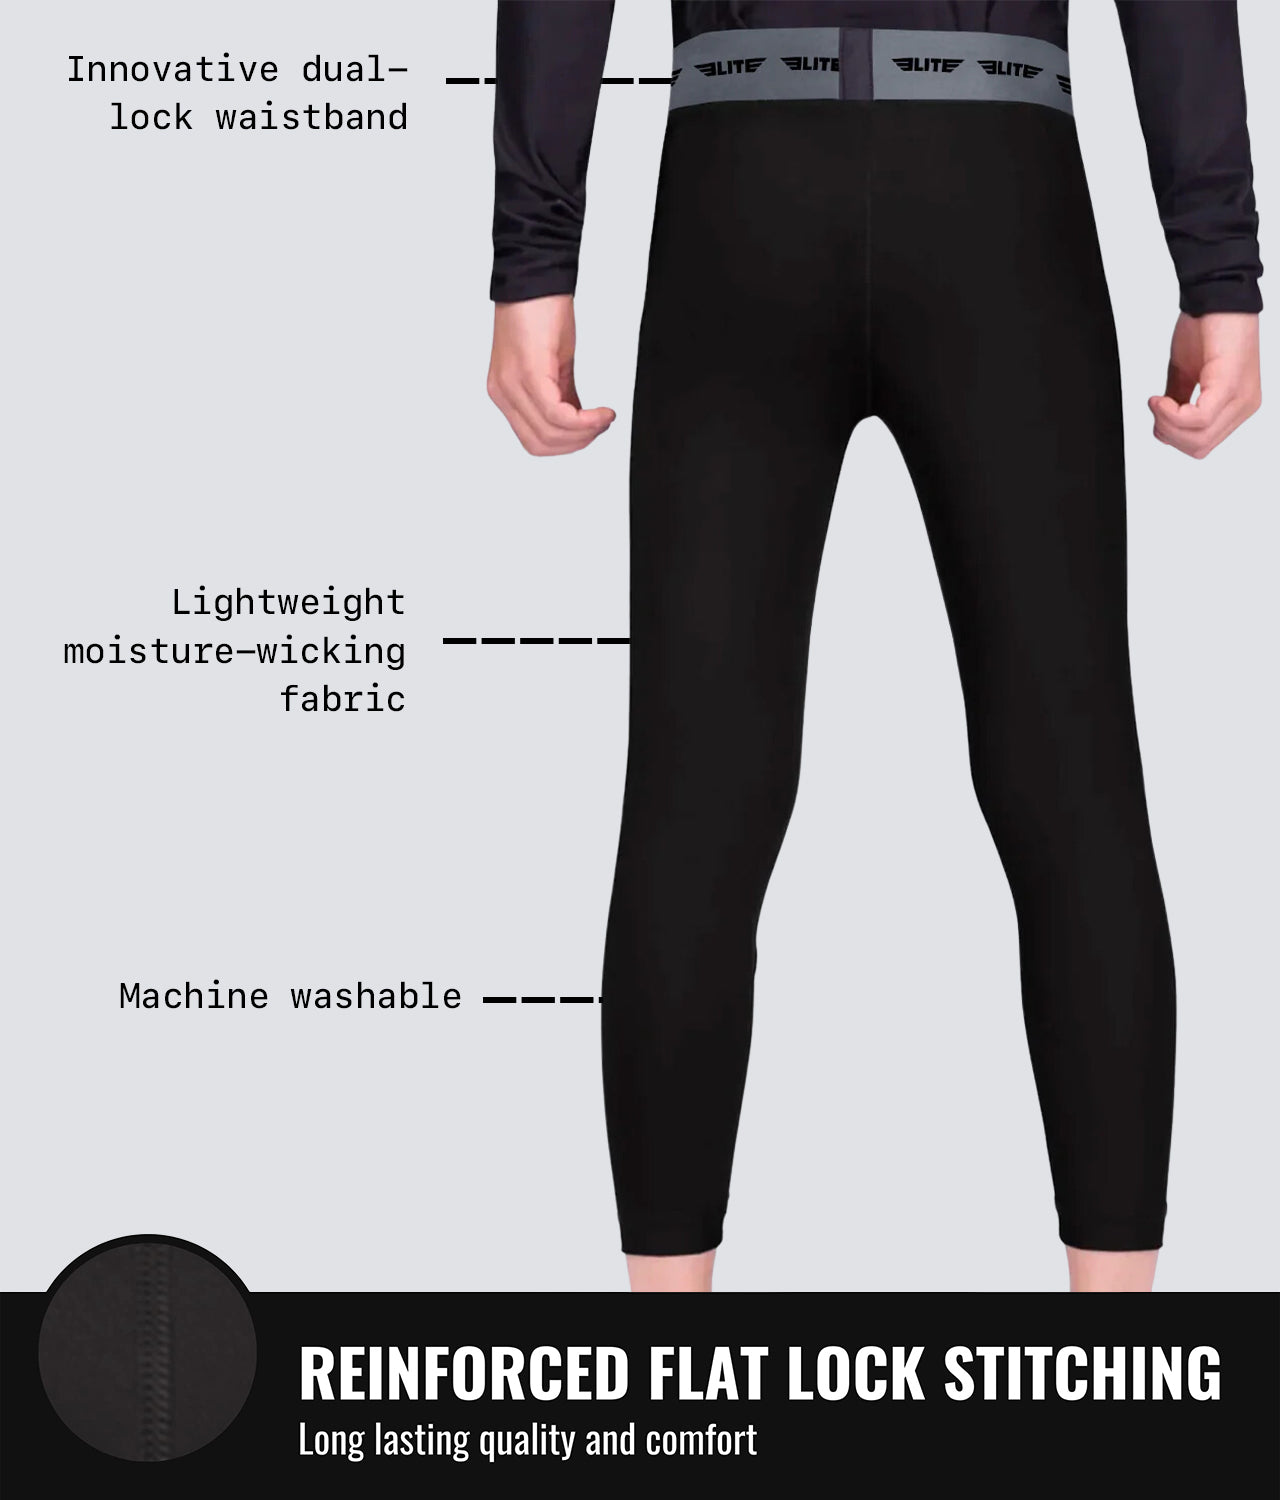 Elite Sports Kids' Plain Black Compression MMA Spat Pants Reinforced Flat Lock Stitching